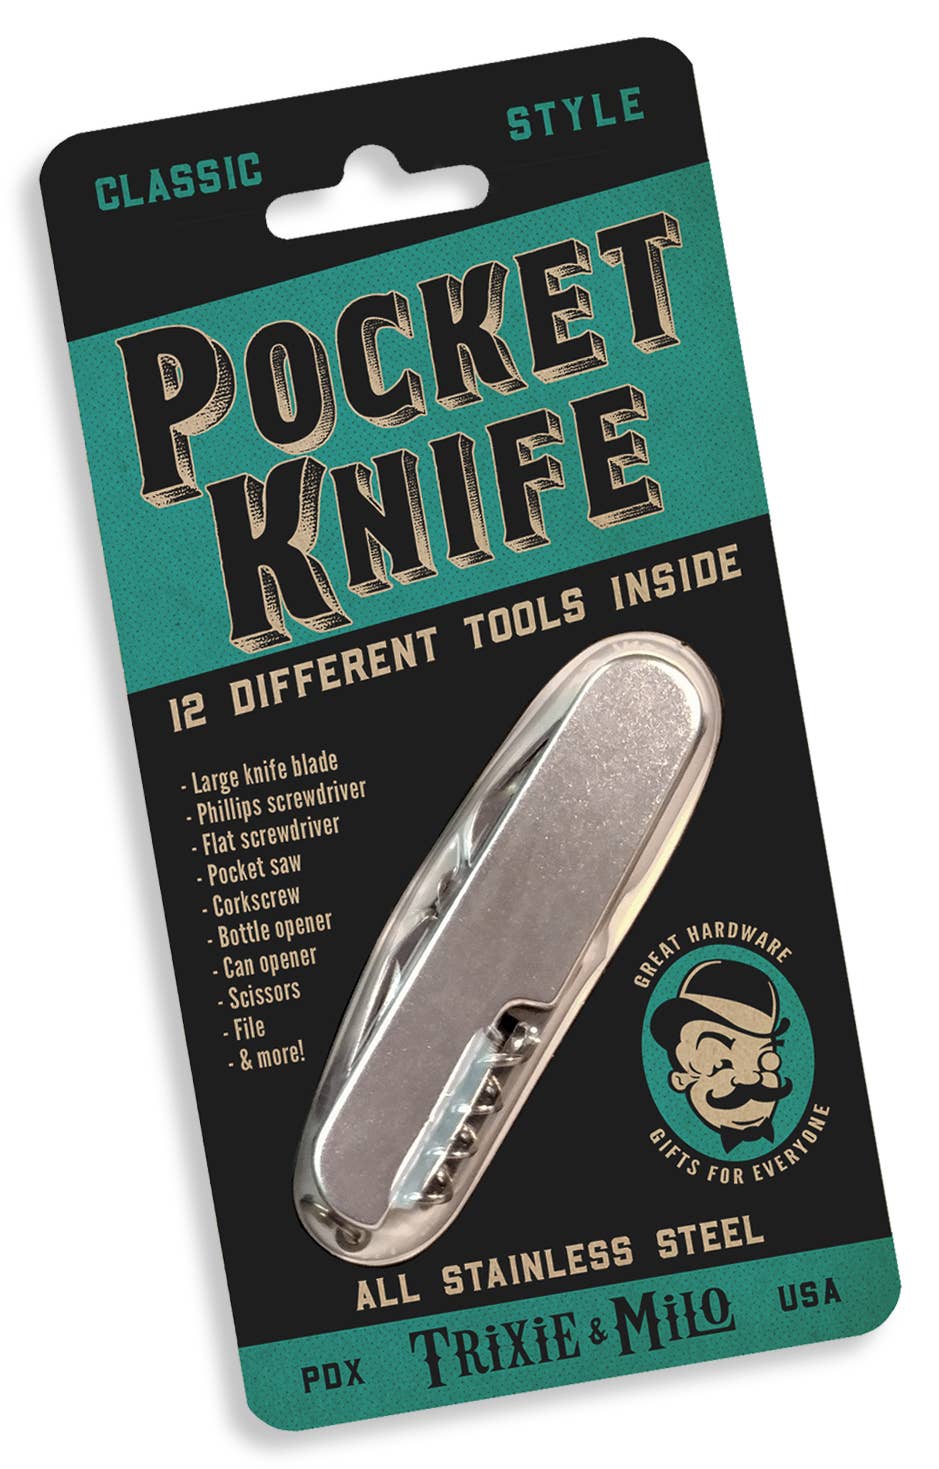 Trixie & Milo - Tool - Classic Pocket Knife